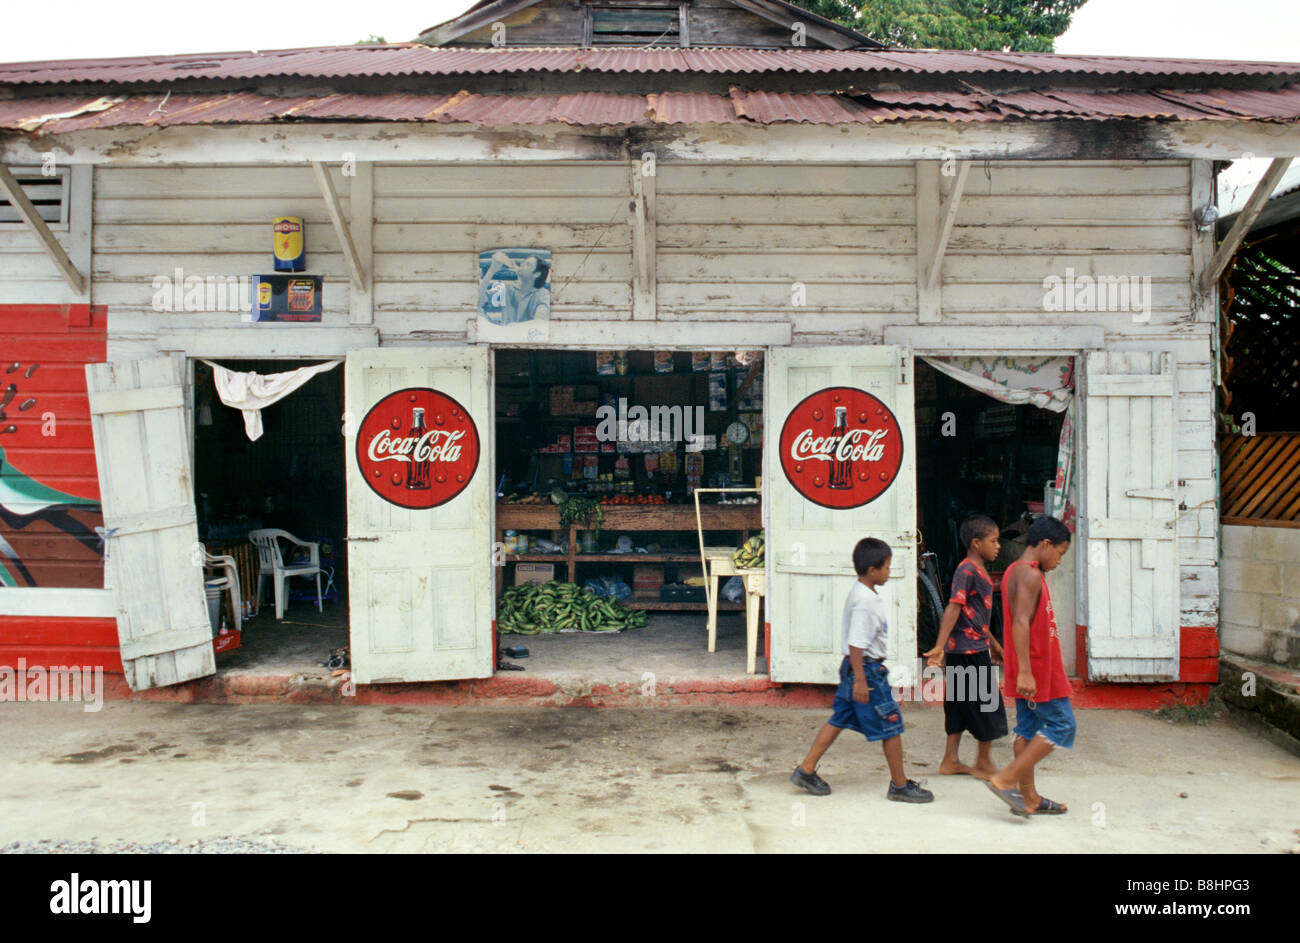 Three children boys walk by a corner store with Coca-cola advertisement in the Garifuna town of Livingstone Guatemala Stock Photo